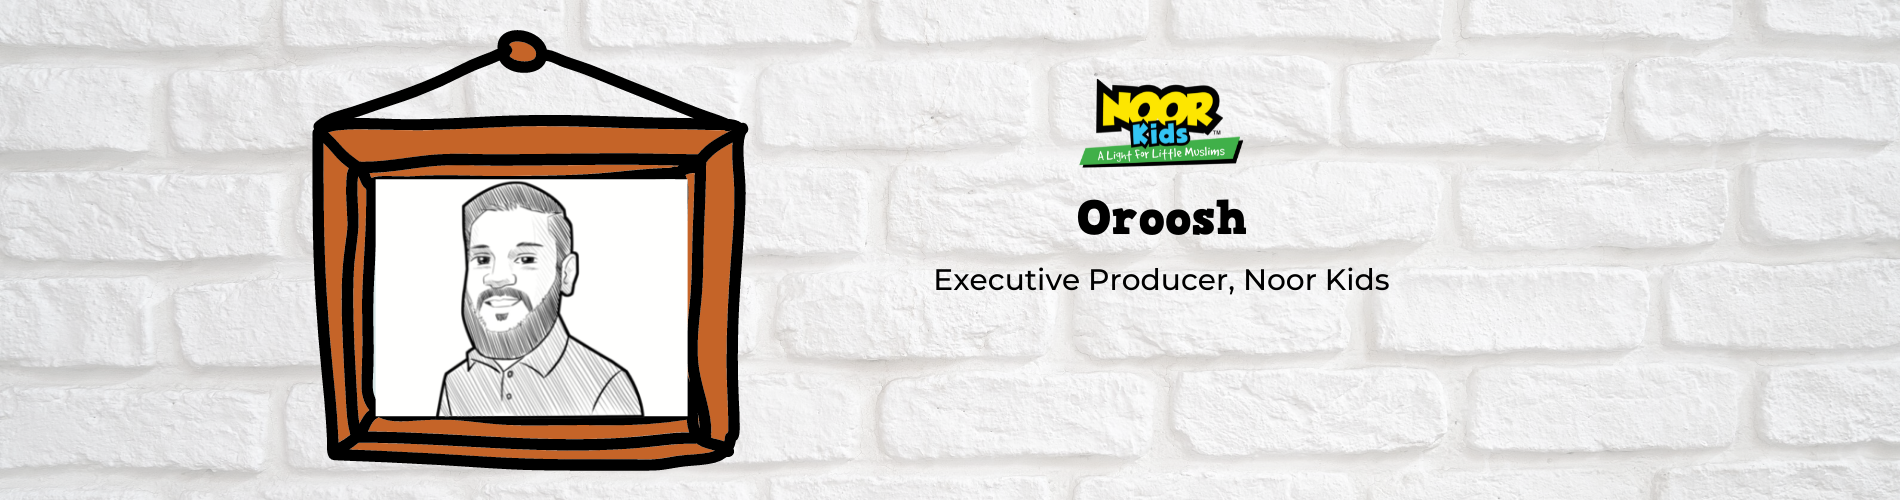 Meet Oroosh, Executive Producer at Noor Kids